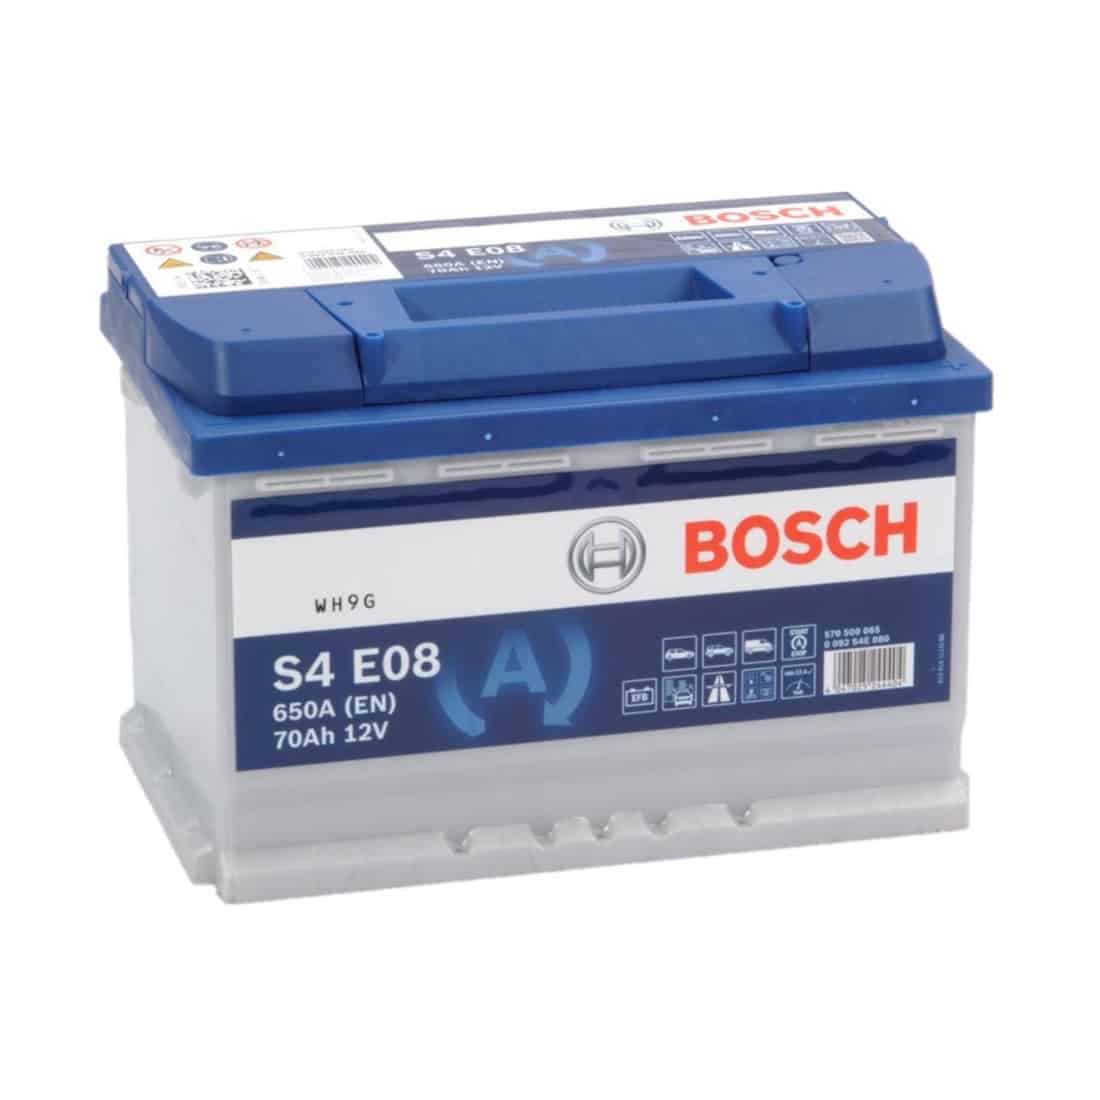 Effectief Vergevingsgezind Discrepantie Bosch S4E08 - 70Ah accu, 760A, 12V (0 092 S4E 081) - Accudeal